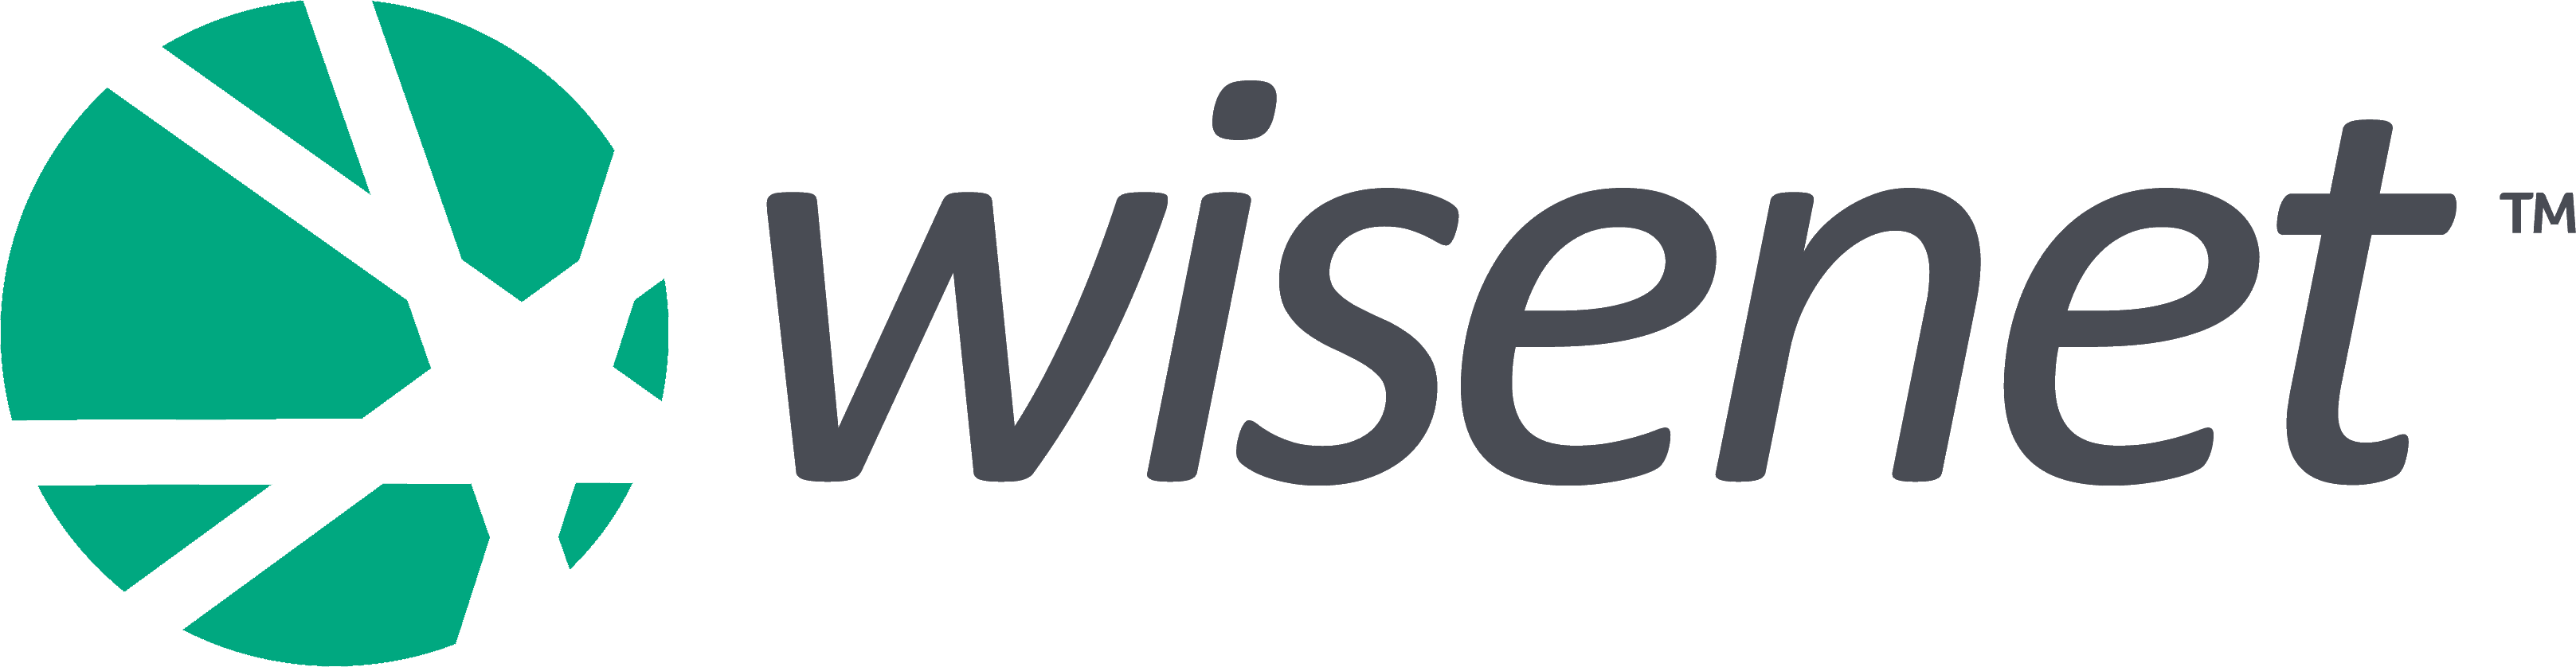 Wisenet transparent logo